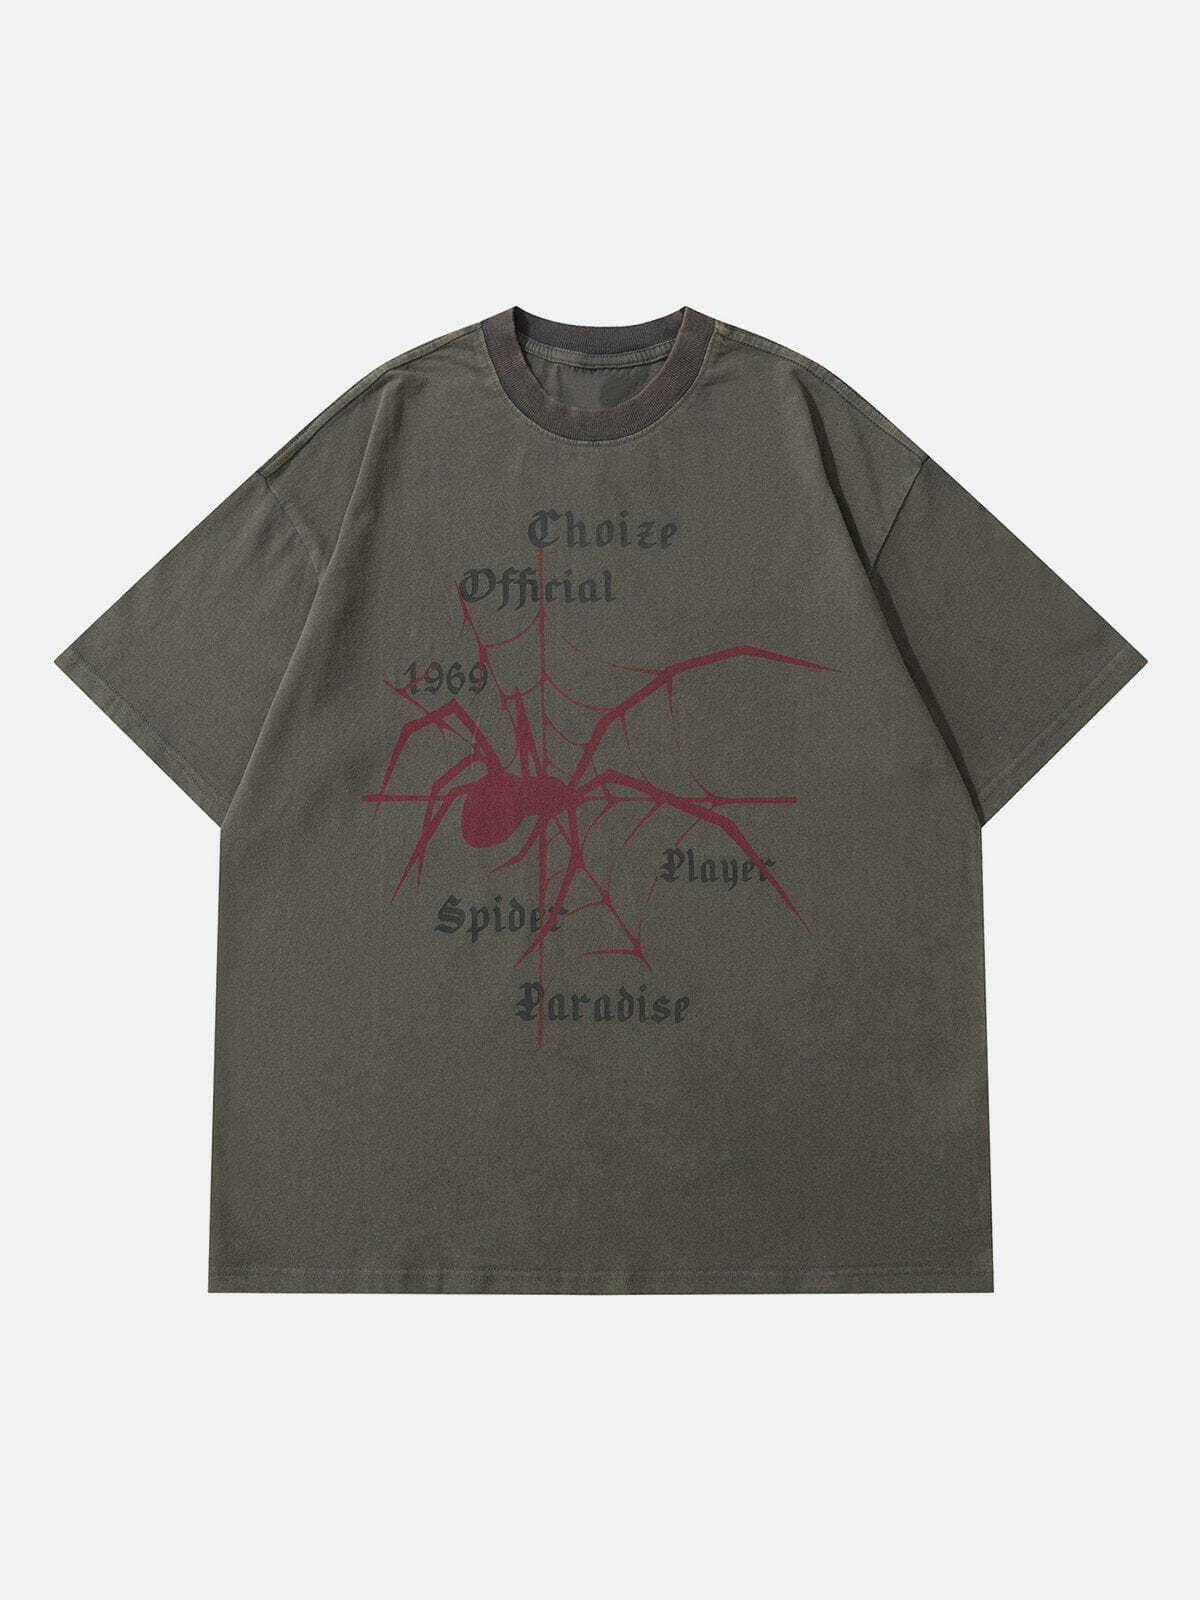 youthful spider print tee edgy retro streetwear shirt 3620